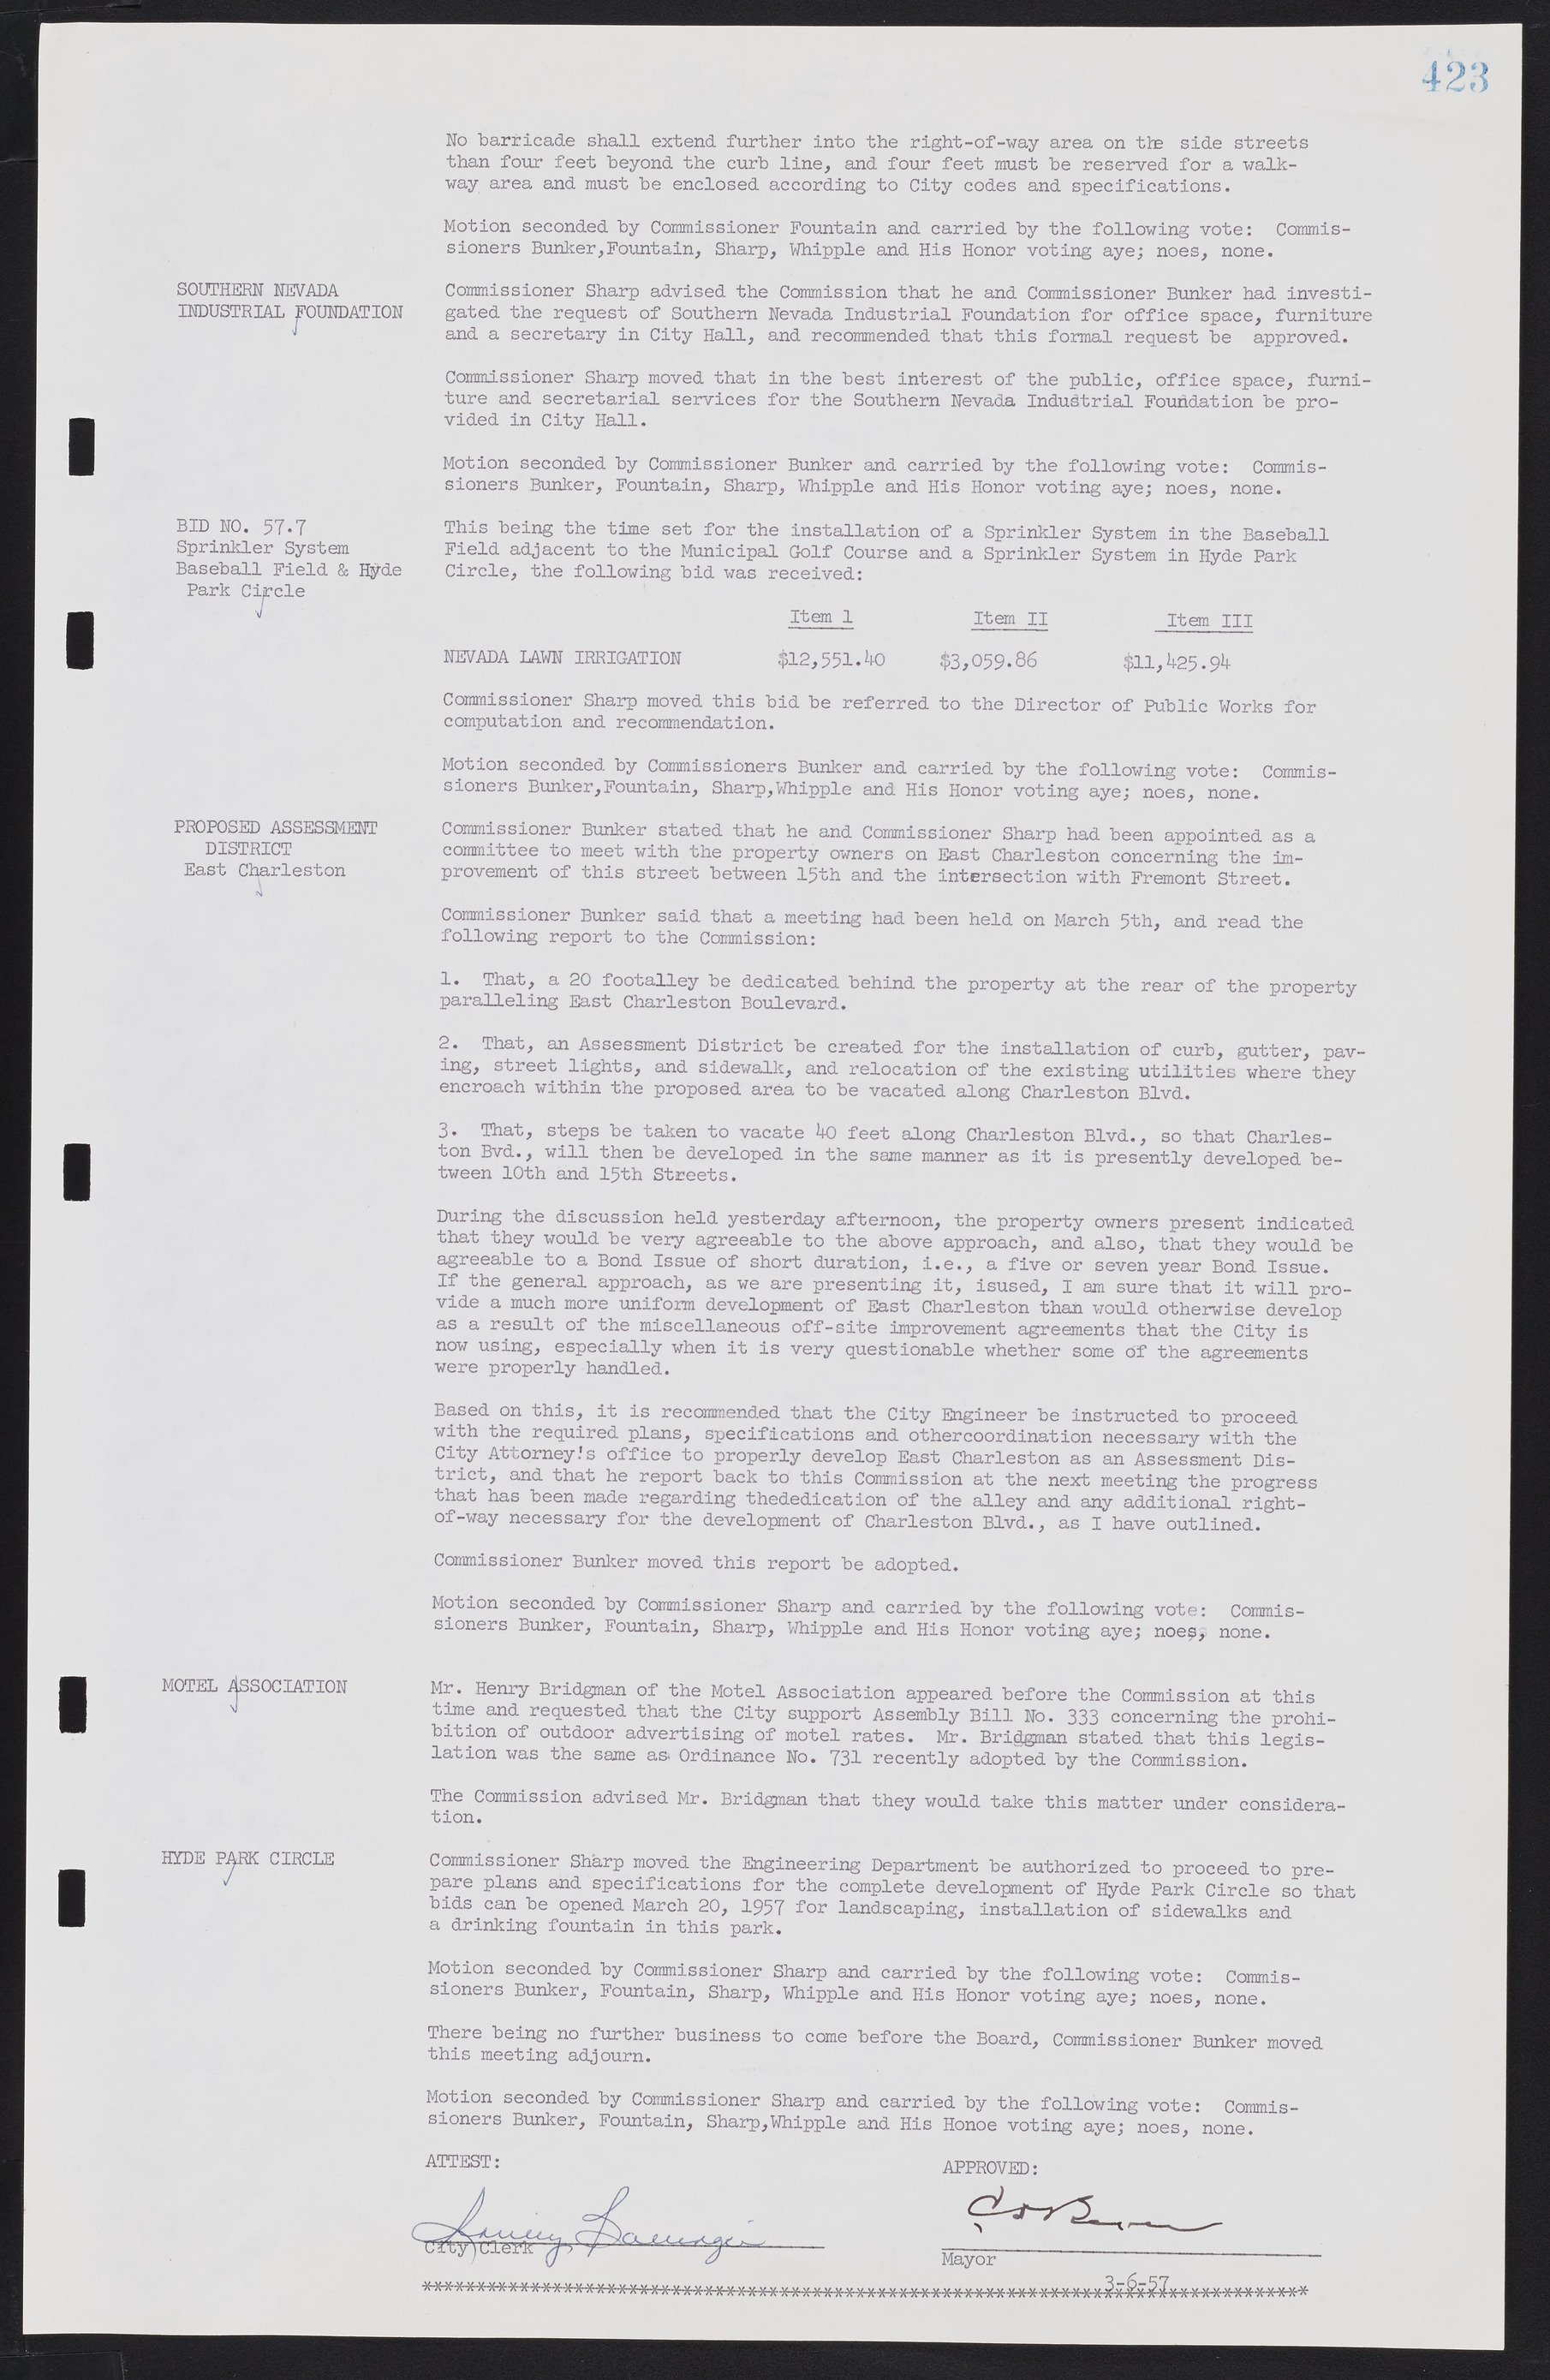 Las Vegas City Commission Minutes, September 21, 1955 to November 20, 1957, lvc000010-443